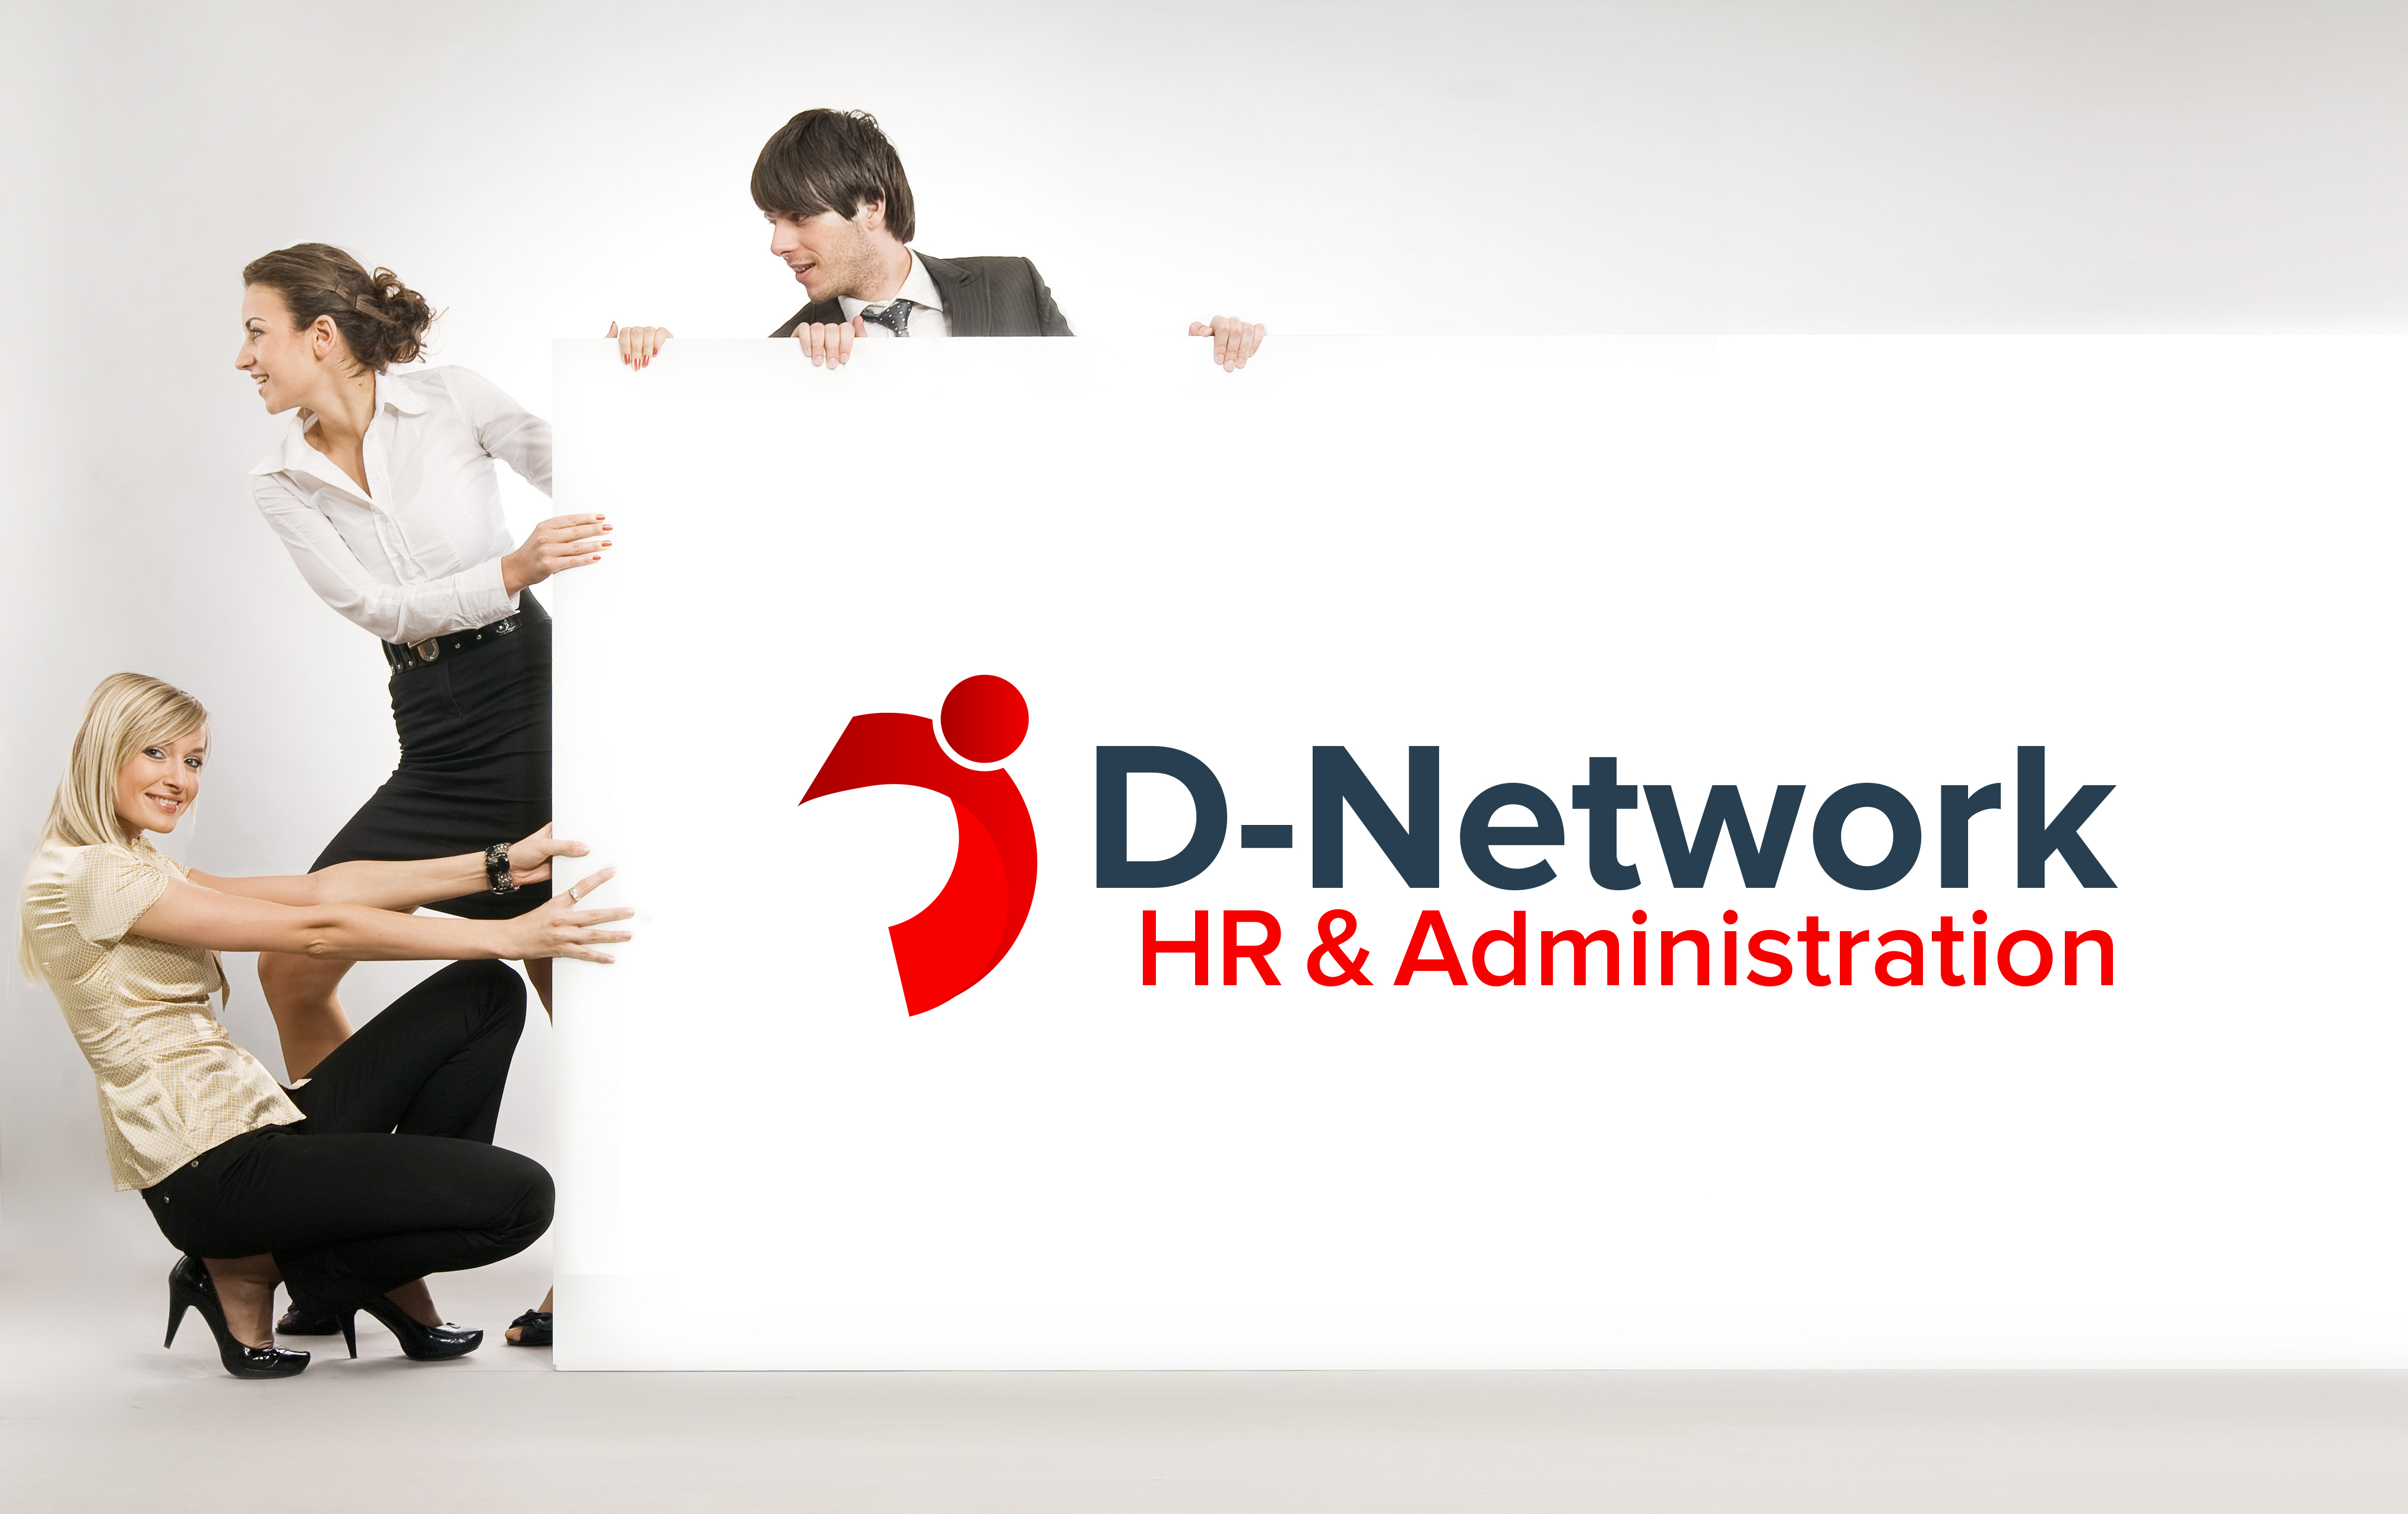 HR & Administration Network